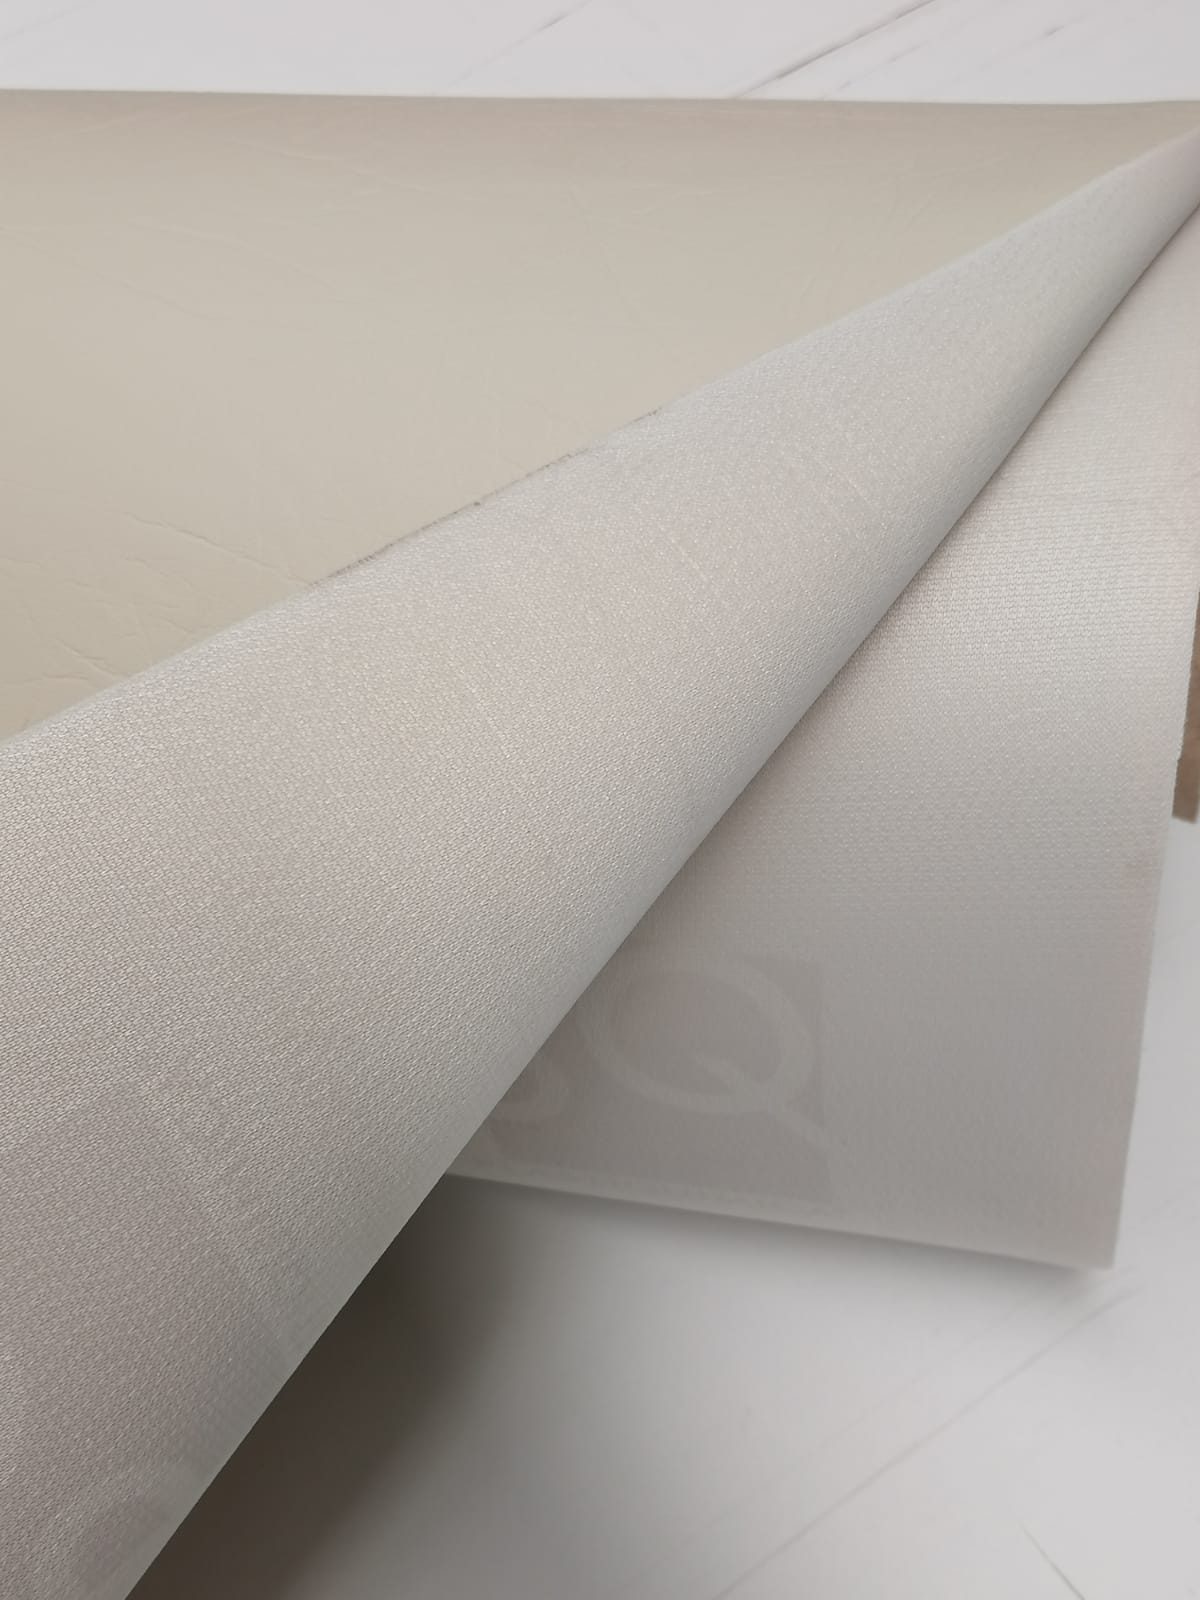 Aritel - Ecocuero tevinil para tapiceria de muebles - Venta por metro ancho 1.4 m